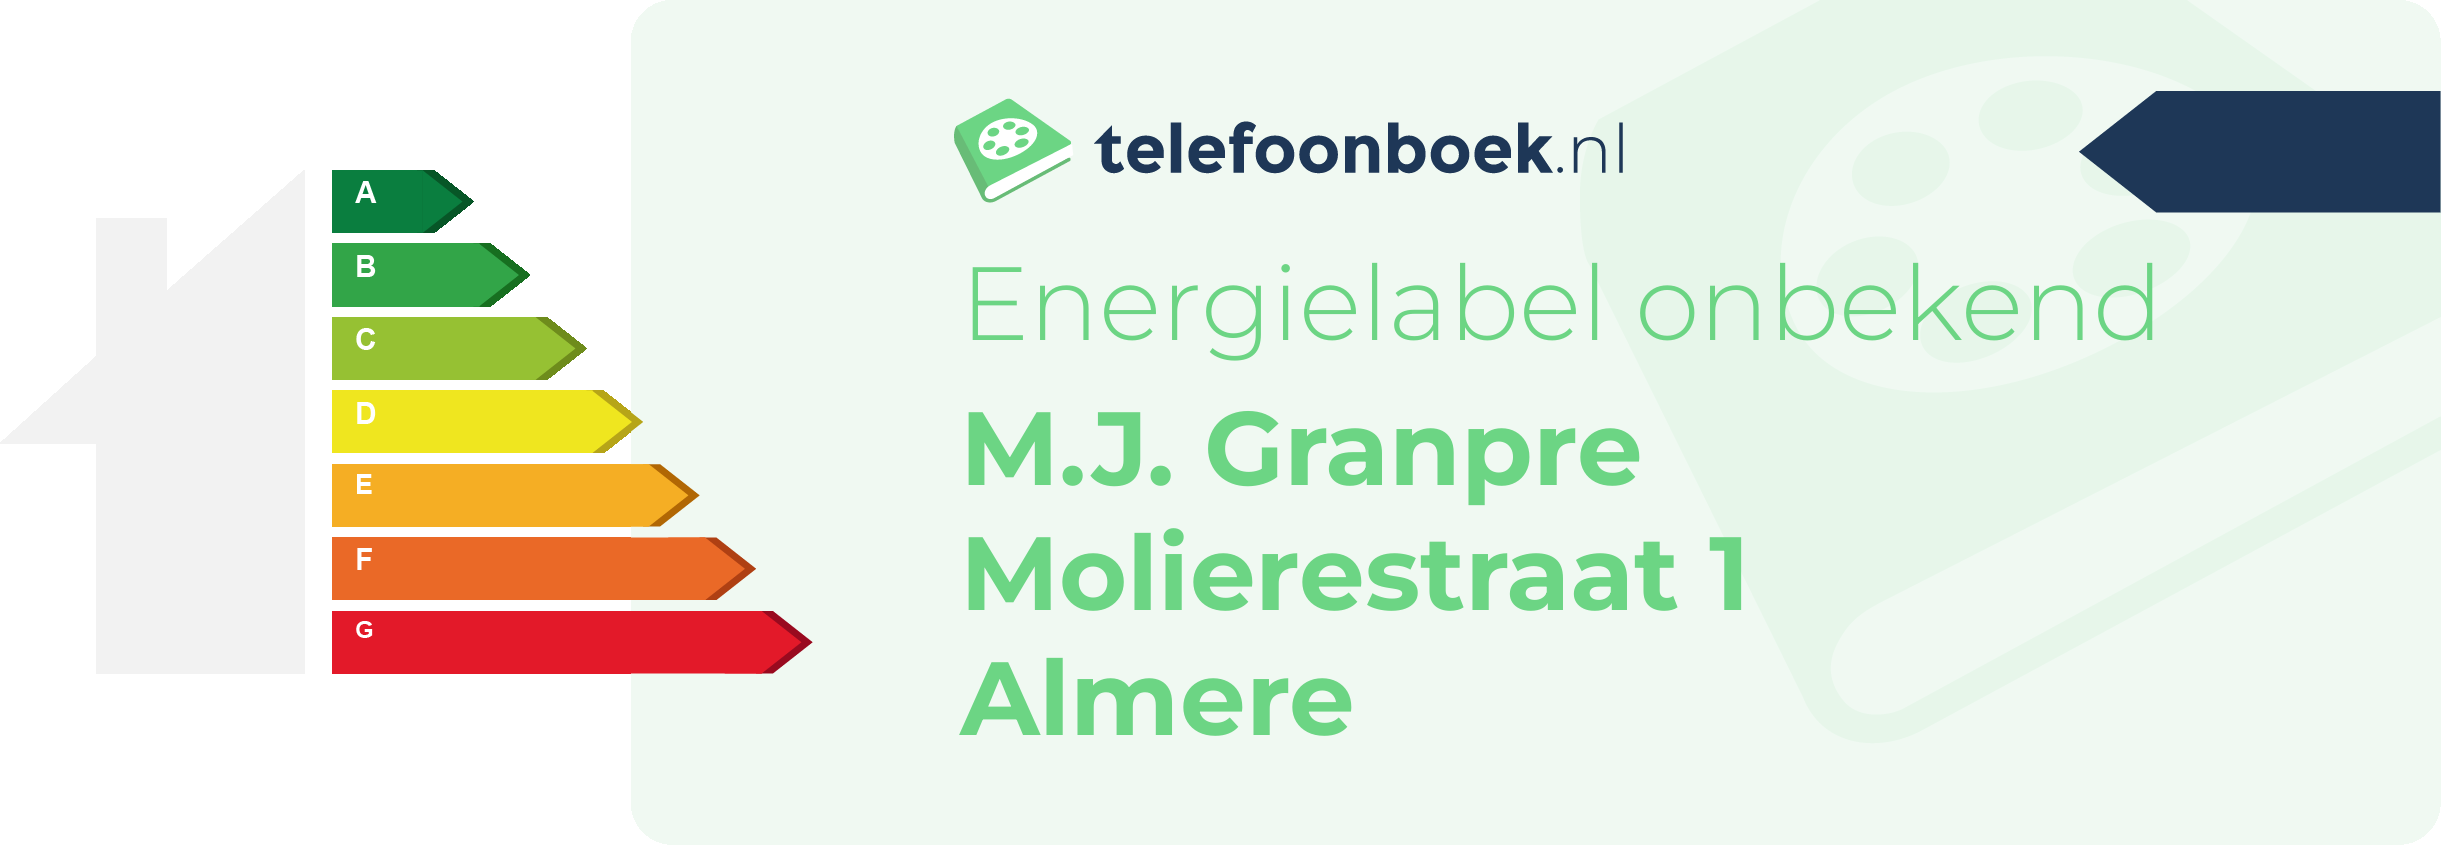 Energielabel M.J. Granpre Molierestraat 1 Almere